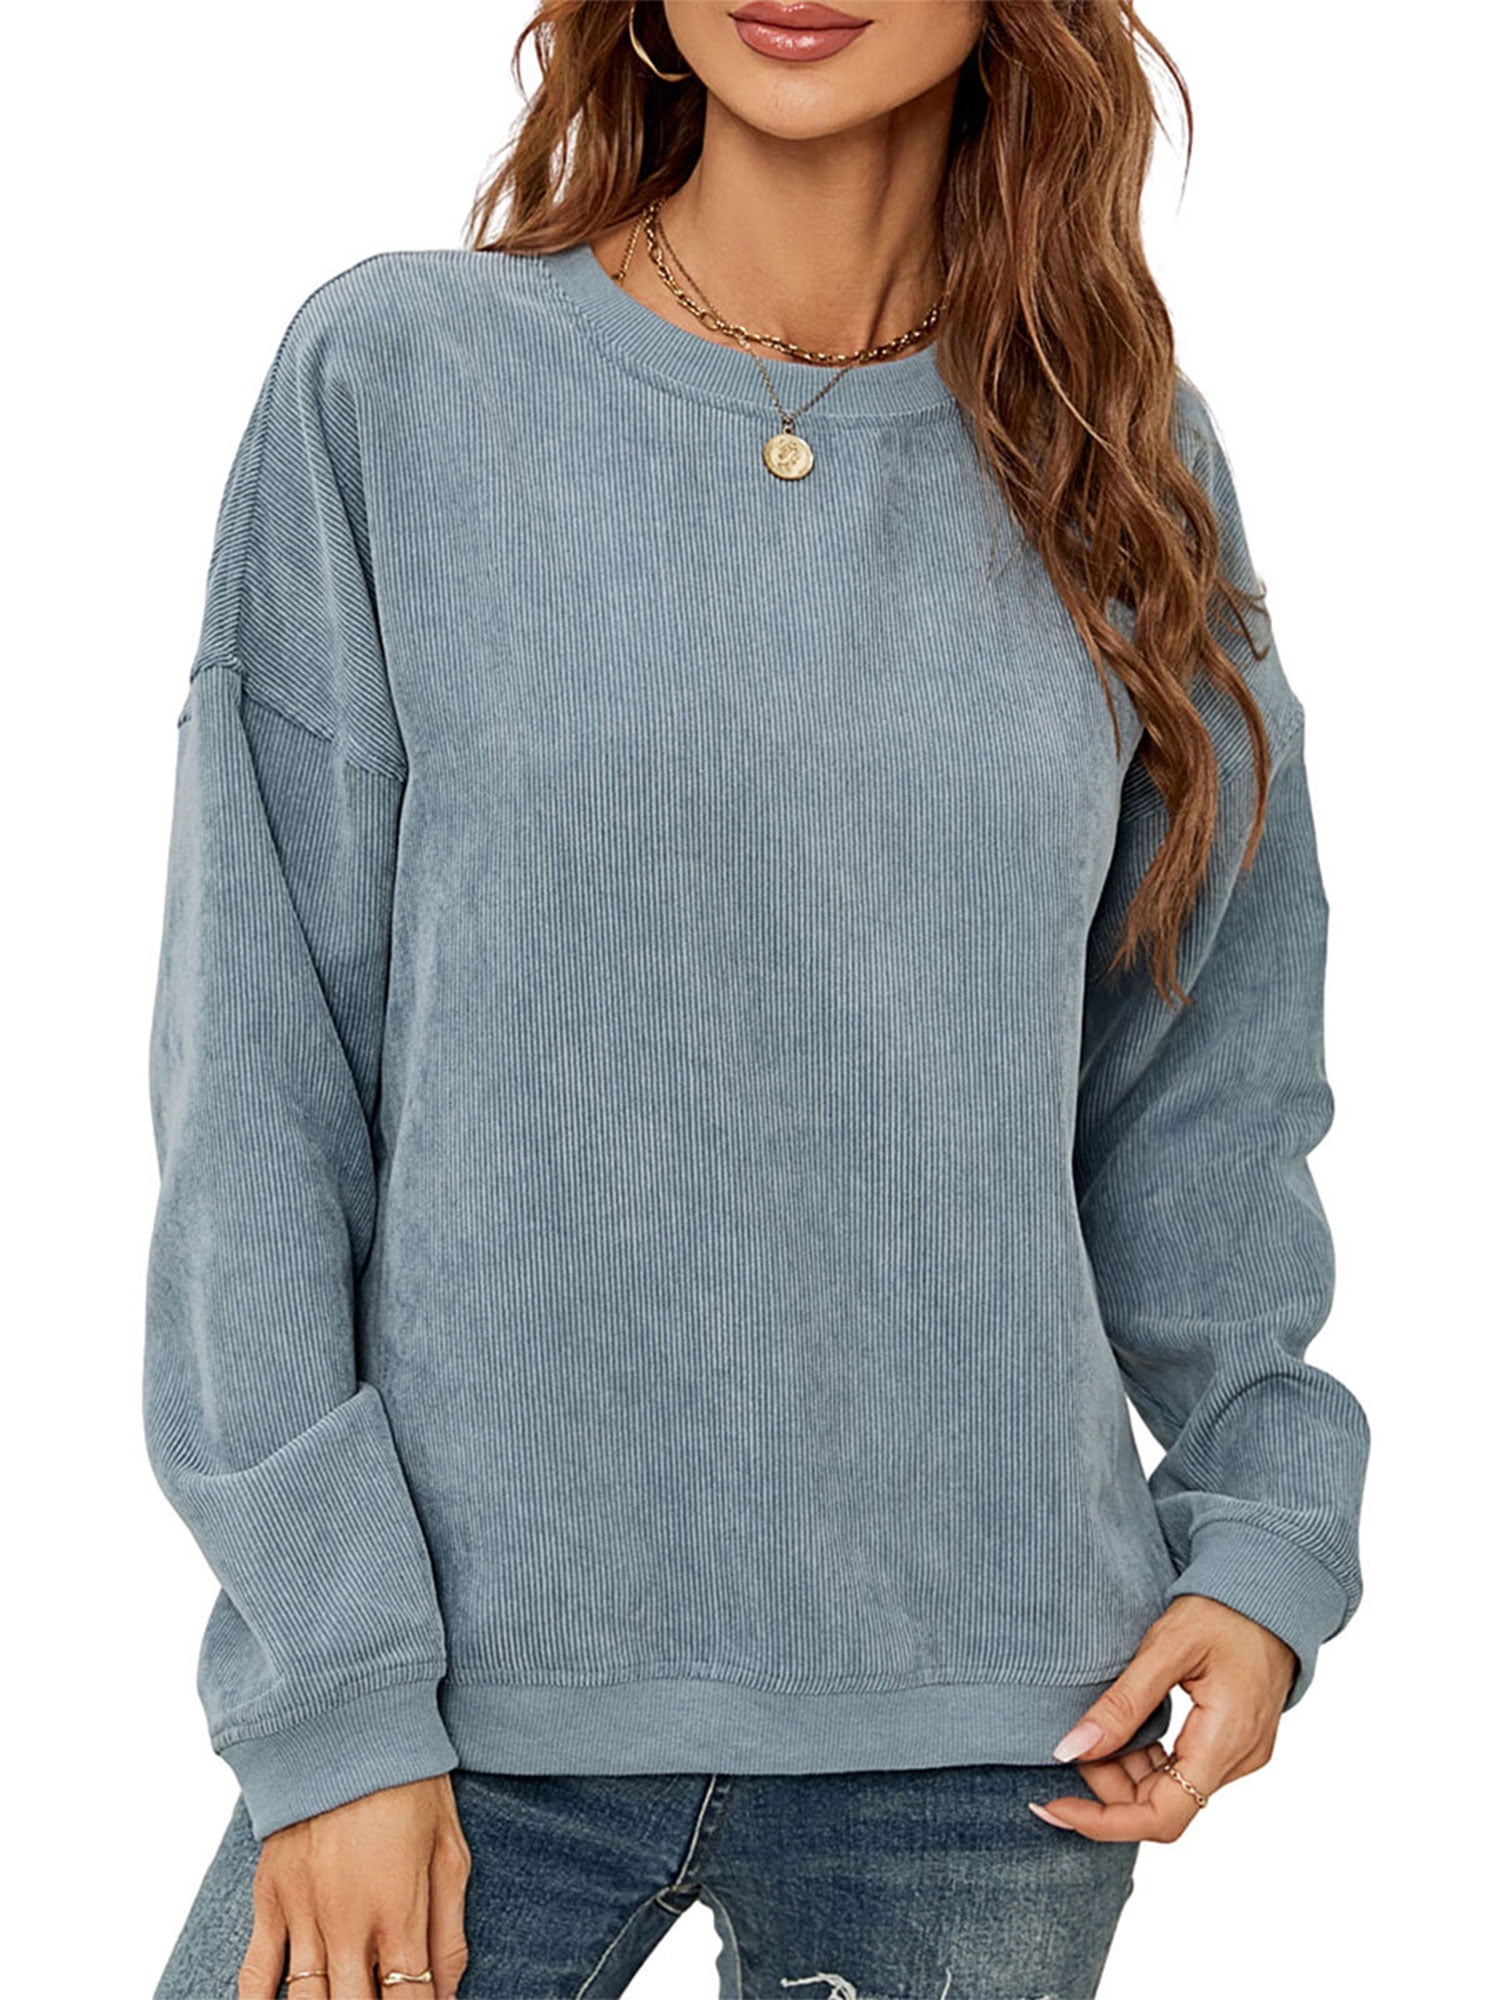 Women's Corduroy Sweatshirts Long Sleeve Solid Color Pullover Tops